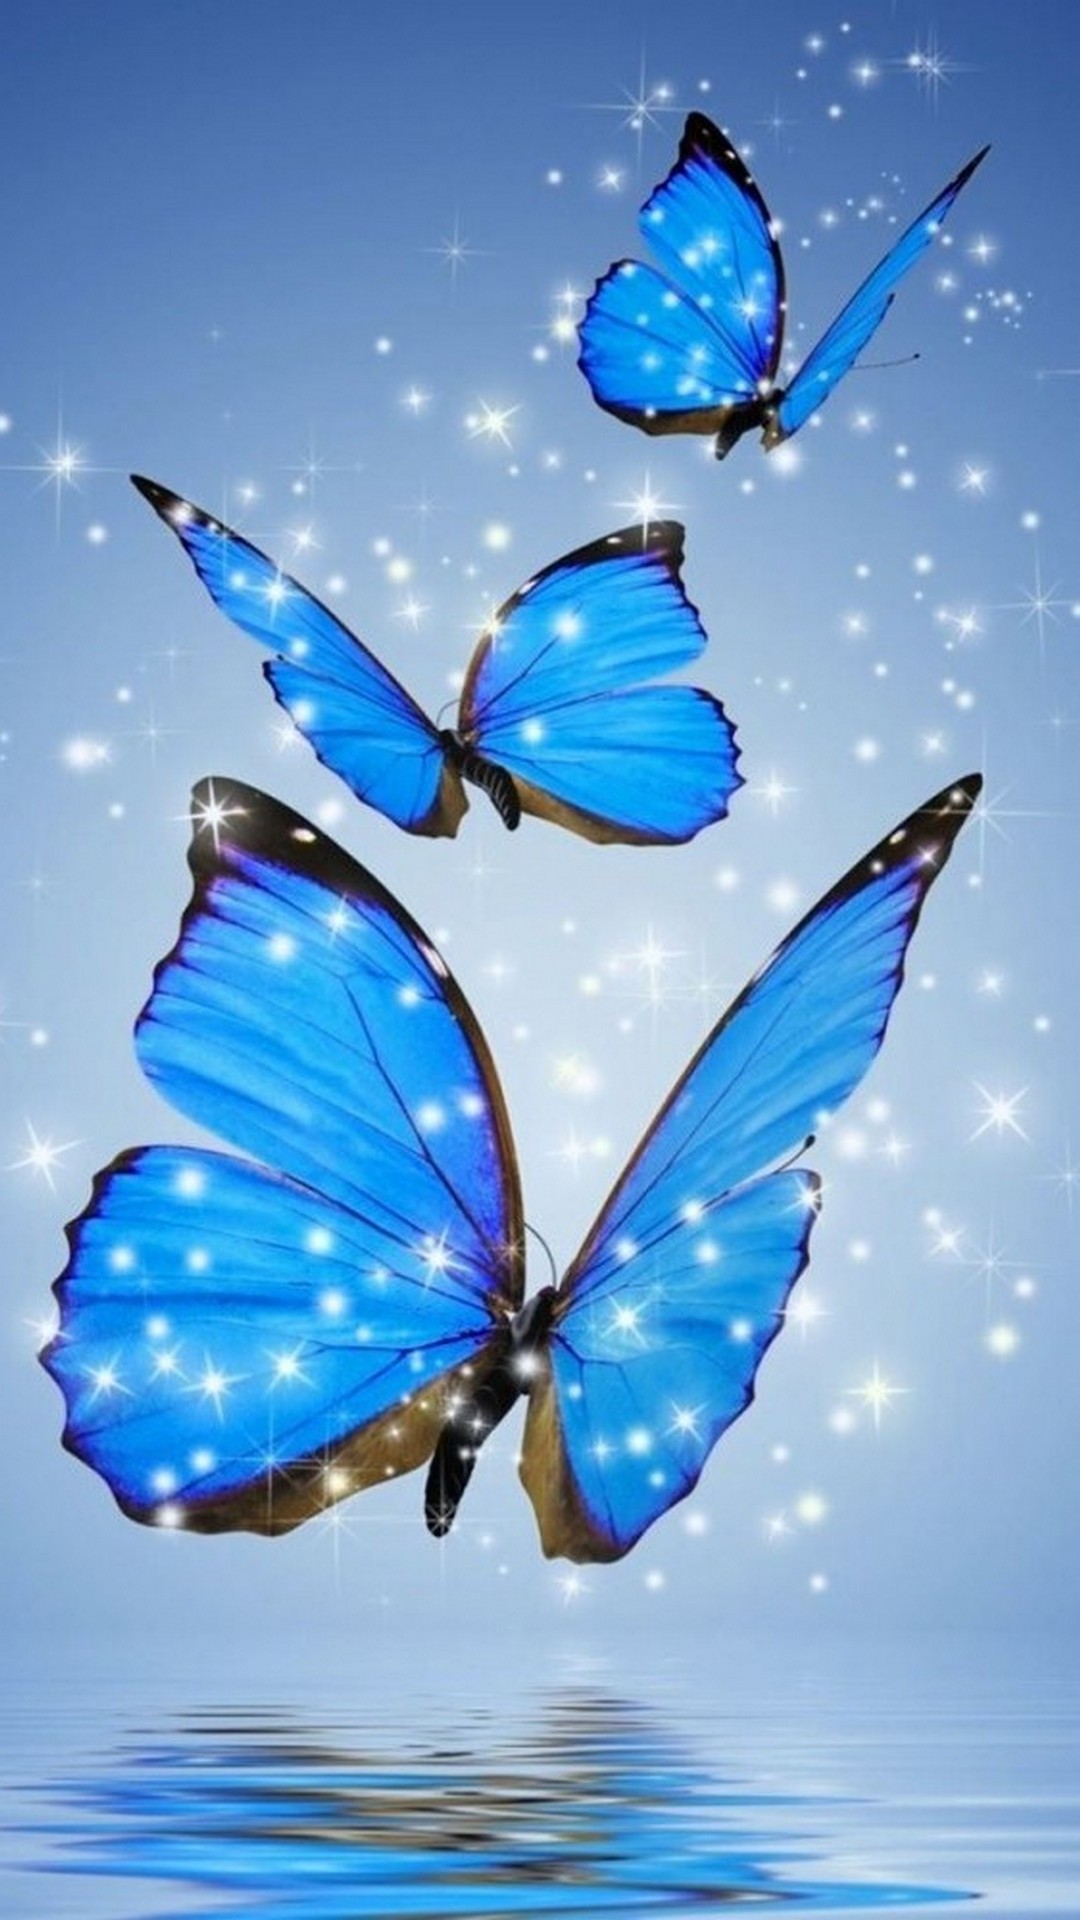 Wallpaper iPhone Blue Butterfly resolution 1080x1920